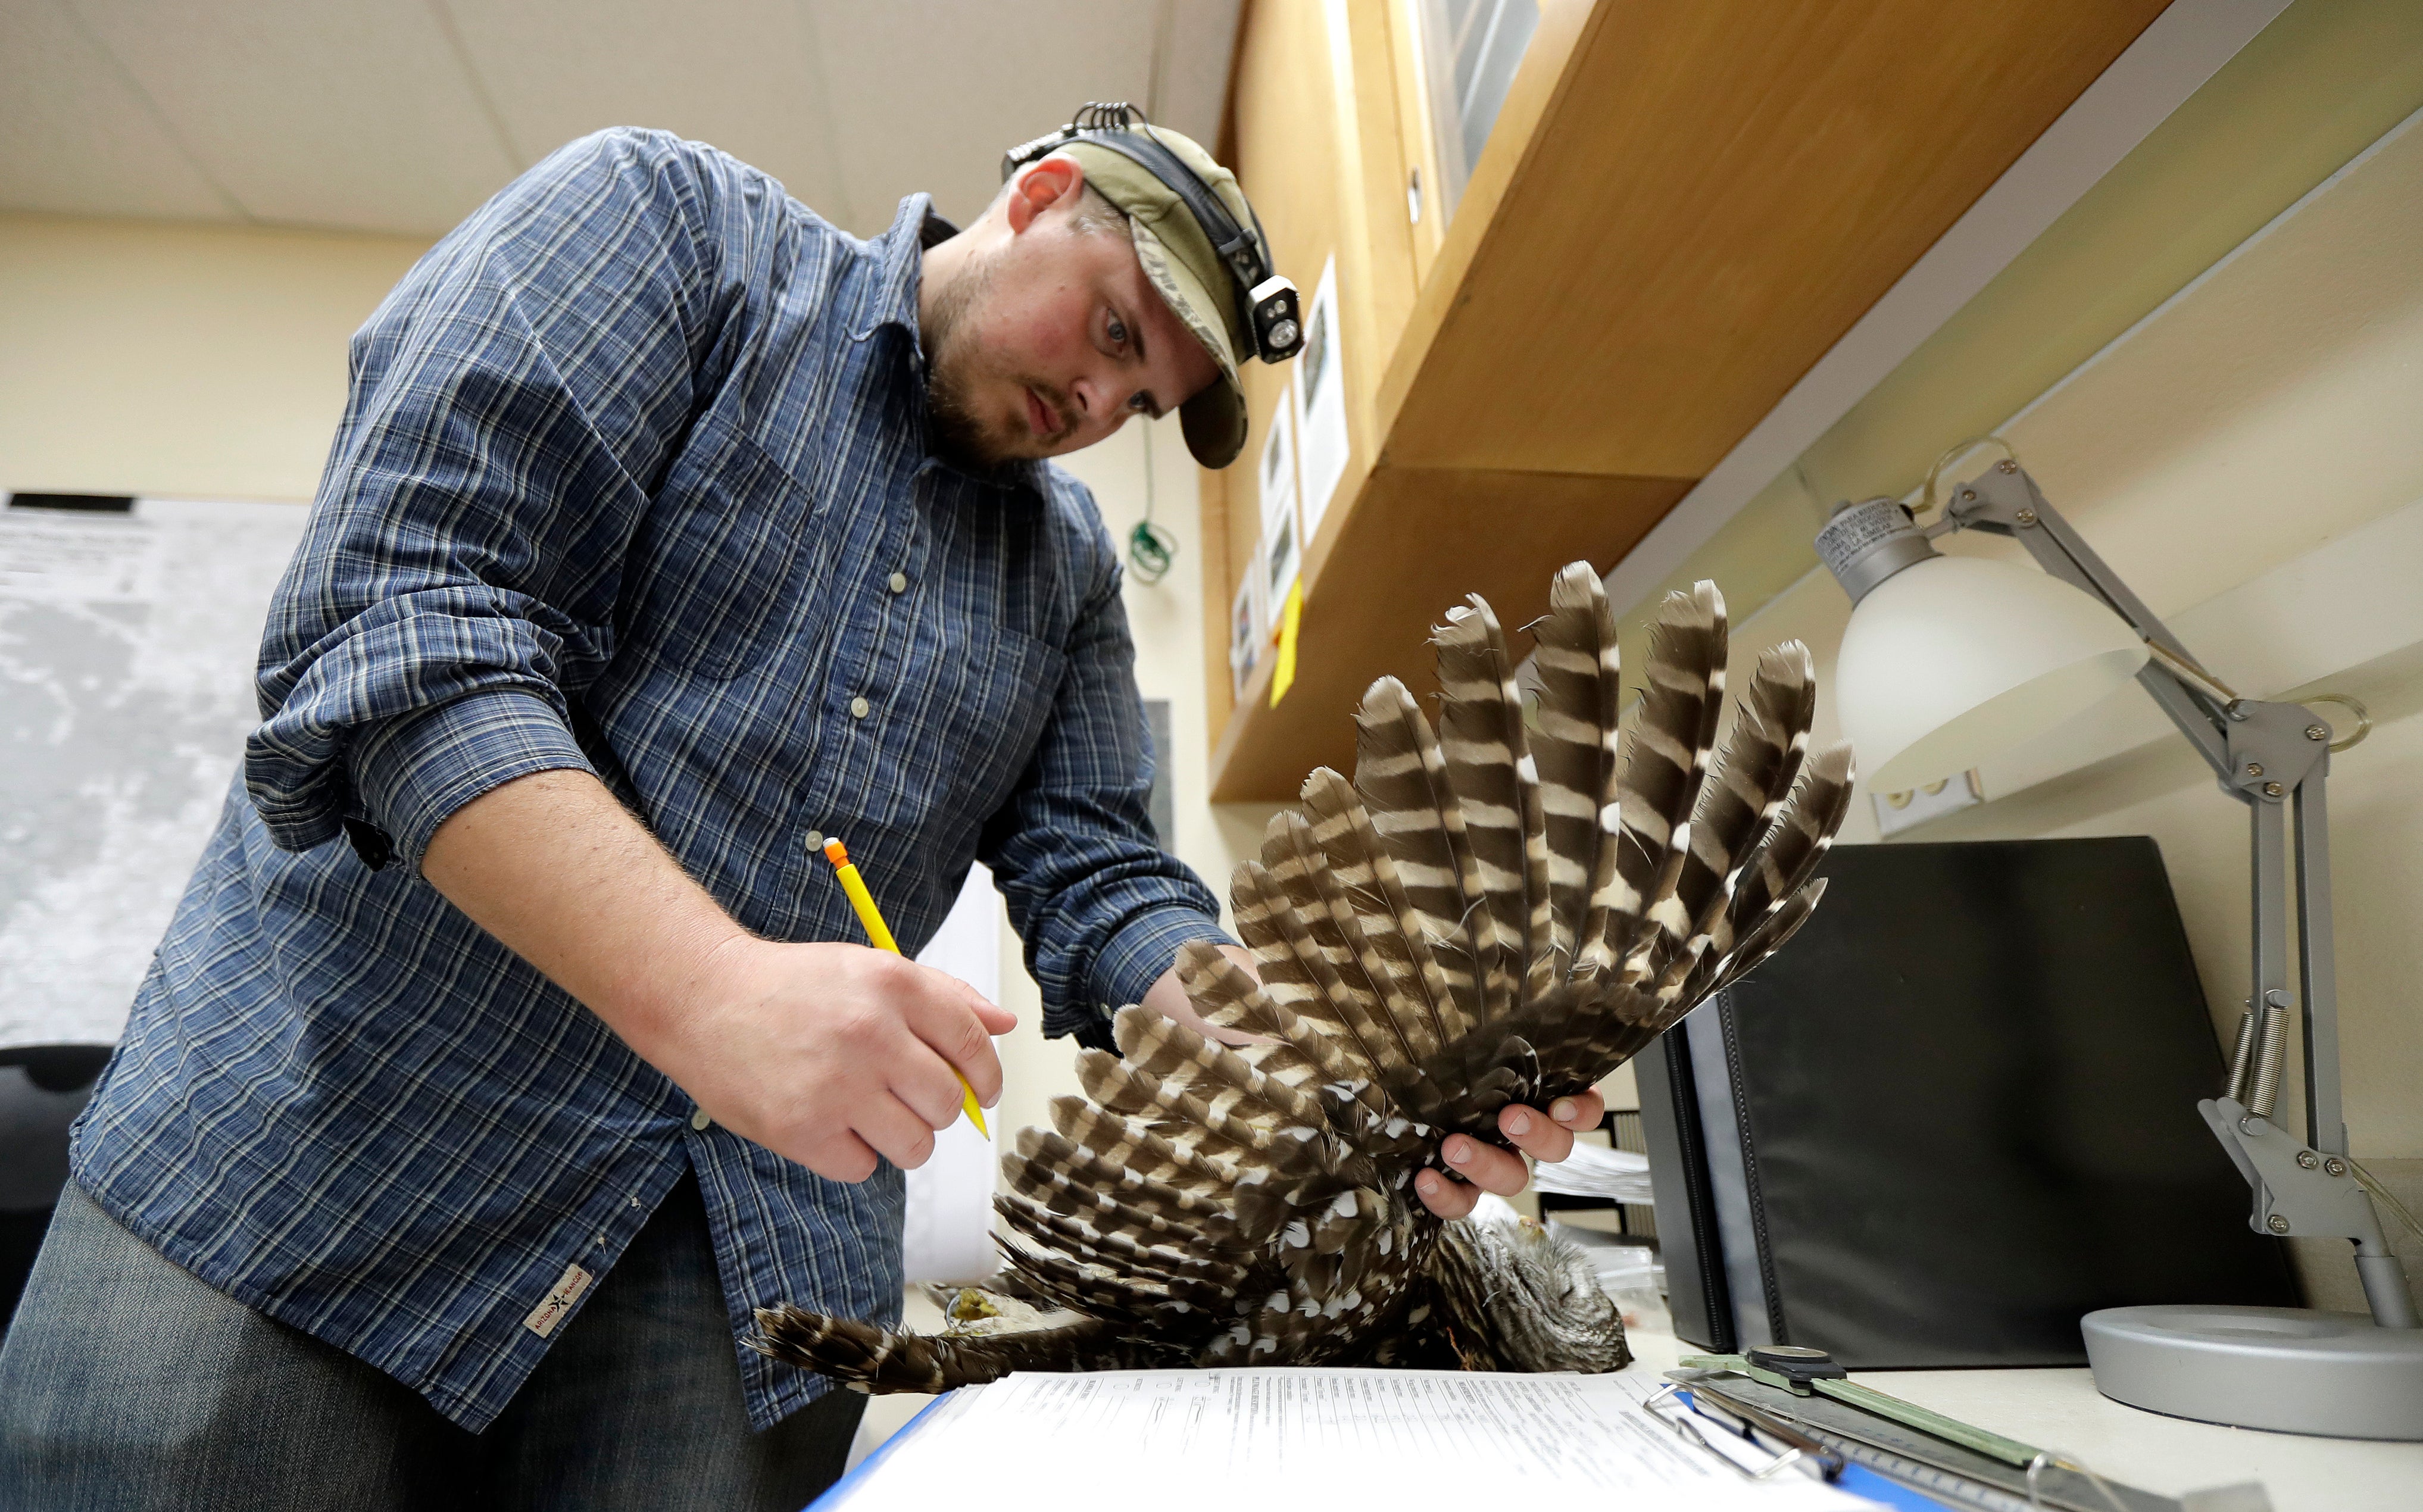 Wildlife technician Jordan Hazan records data in a lab from a male barred owl he shot earlier in the night